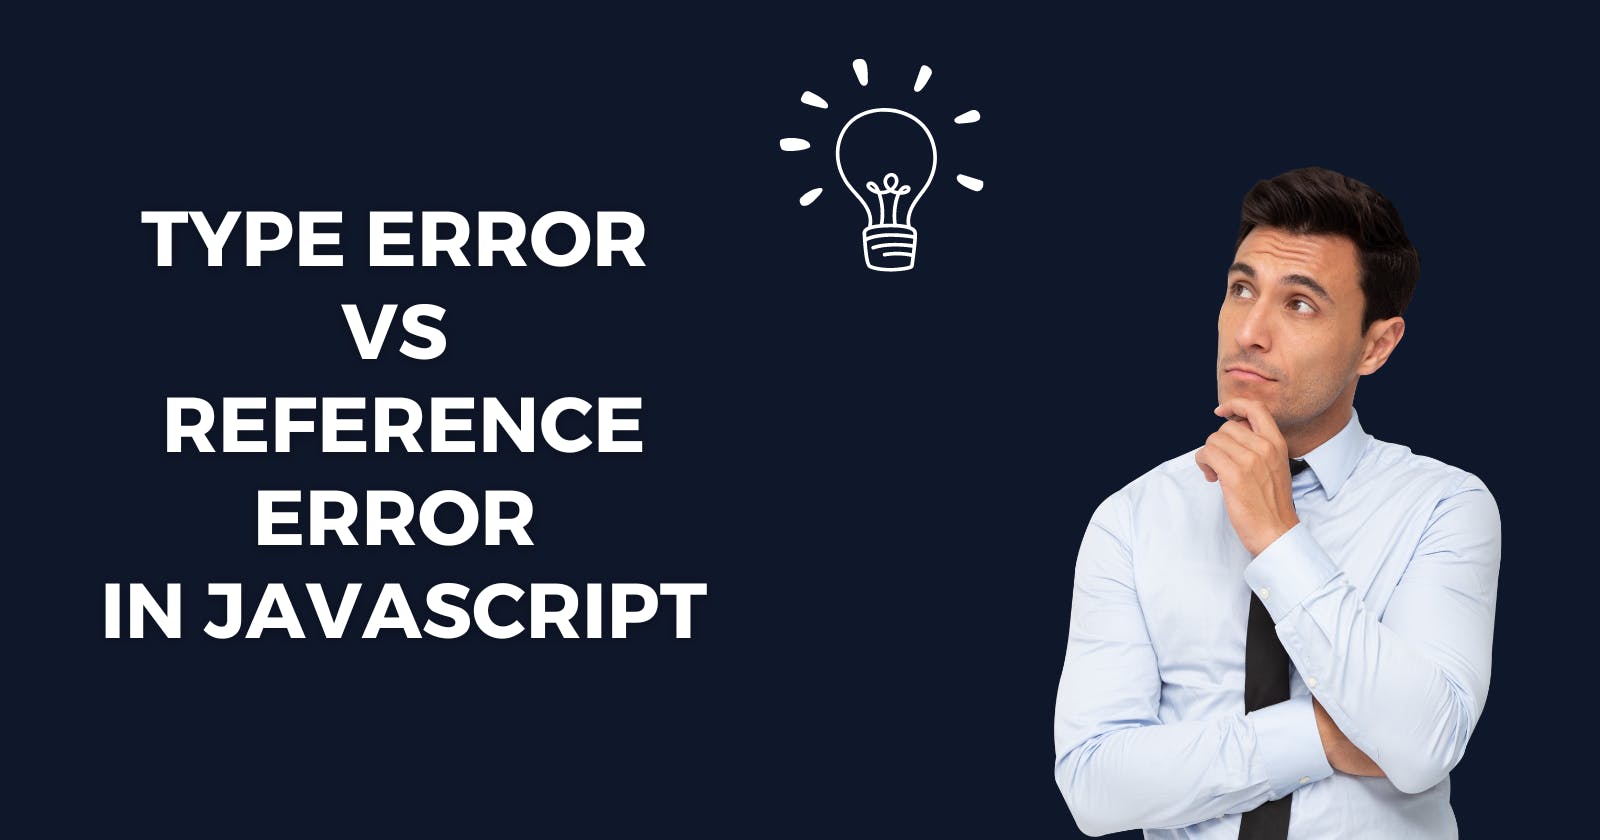 Type Error Vs Reference Error in JavaScript